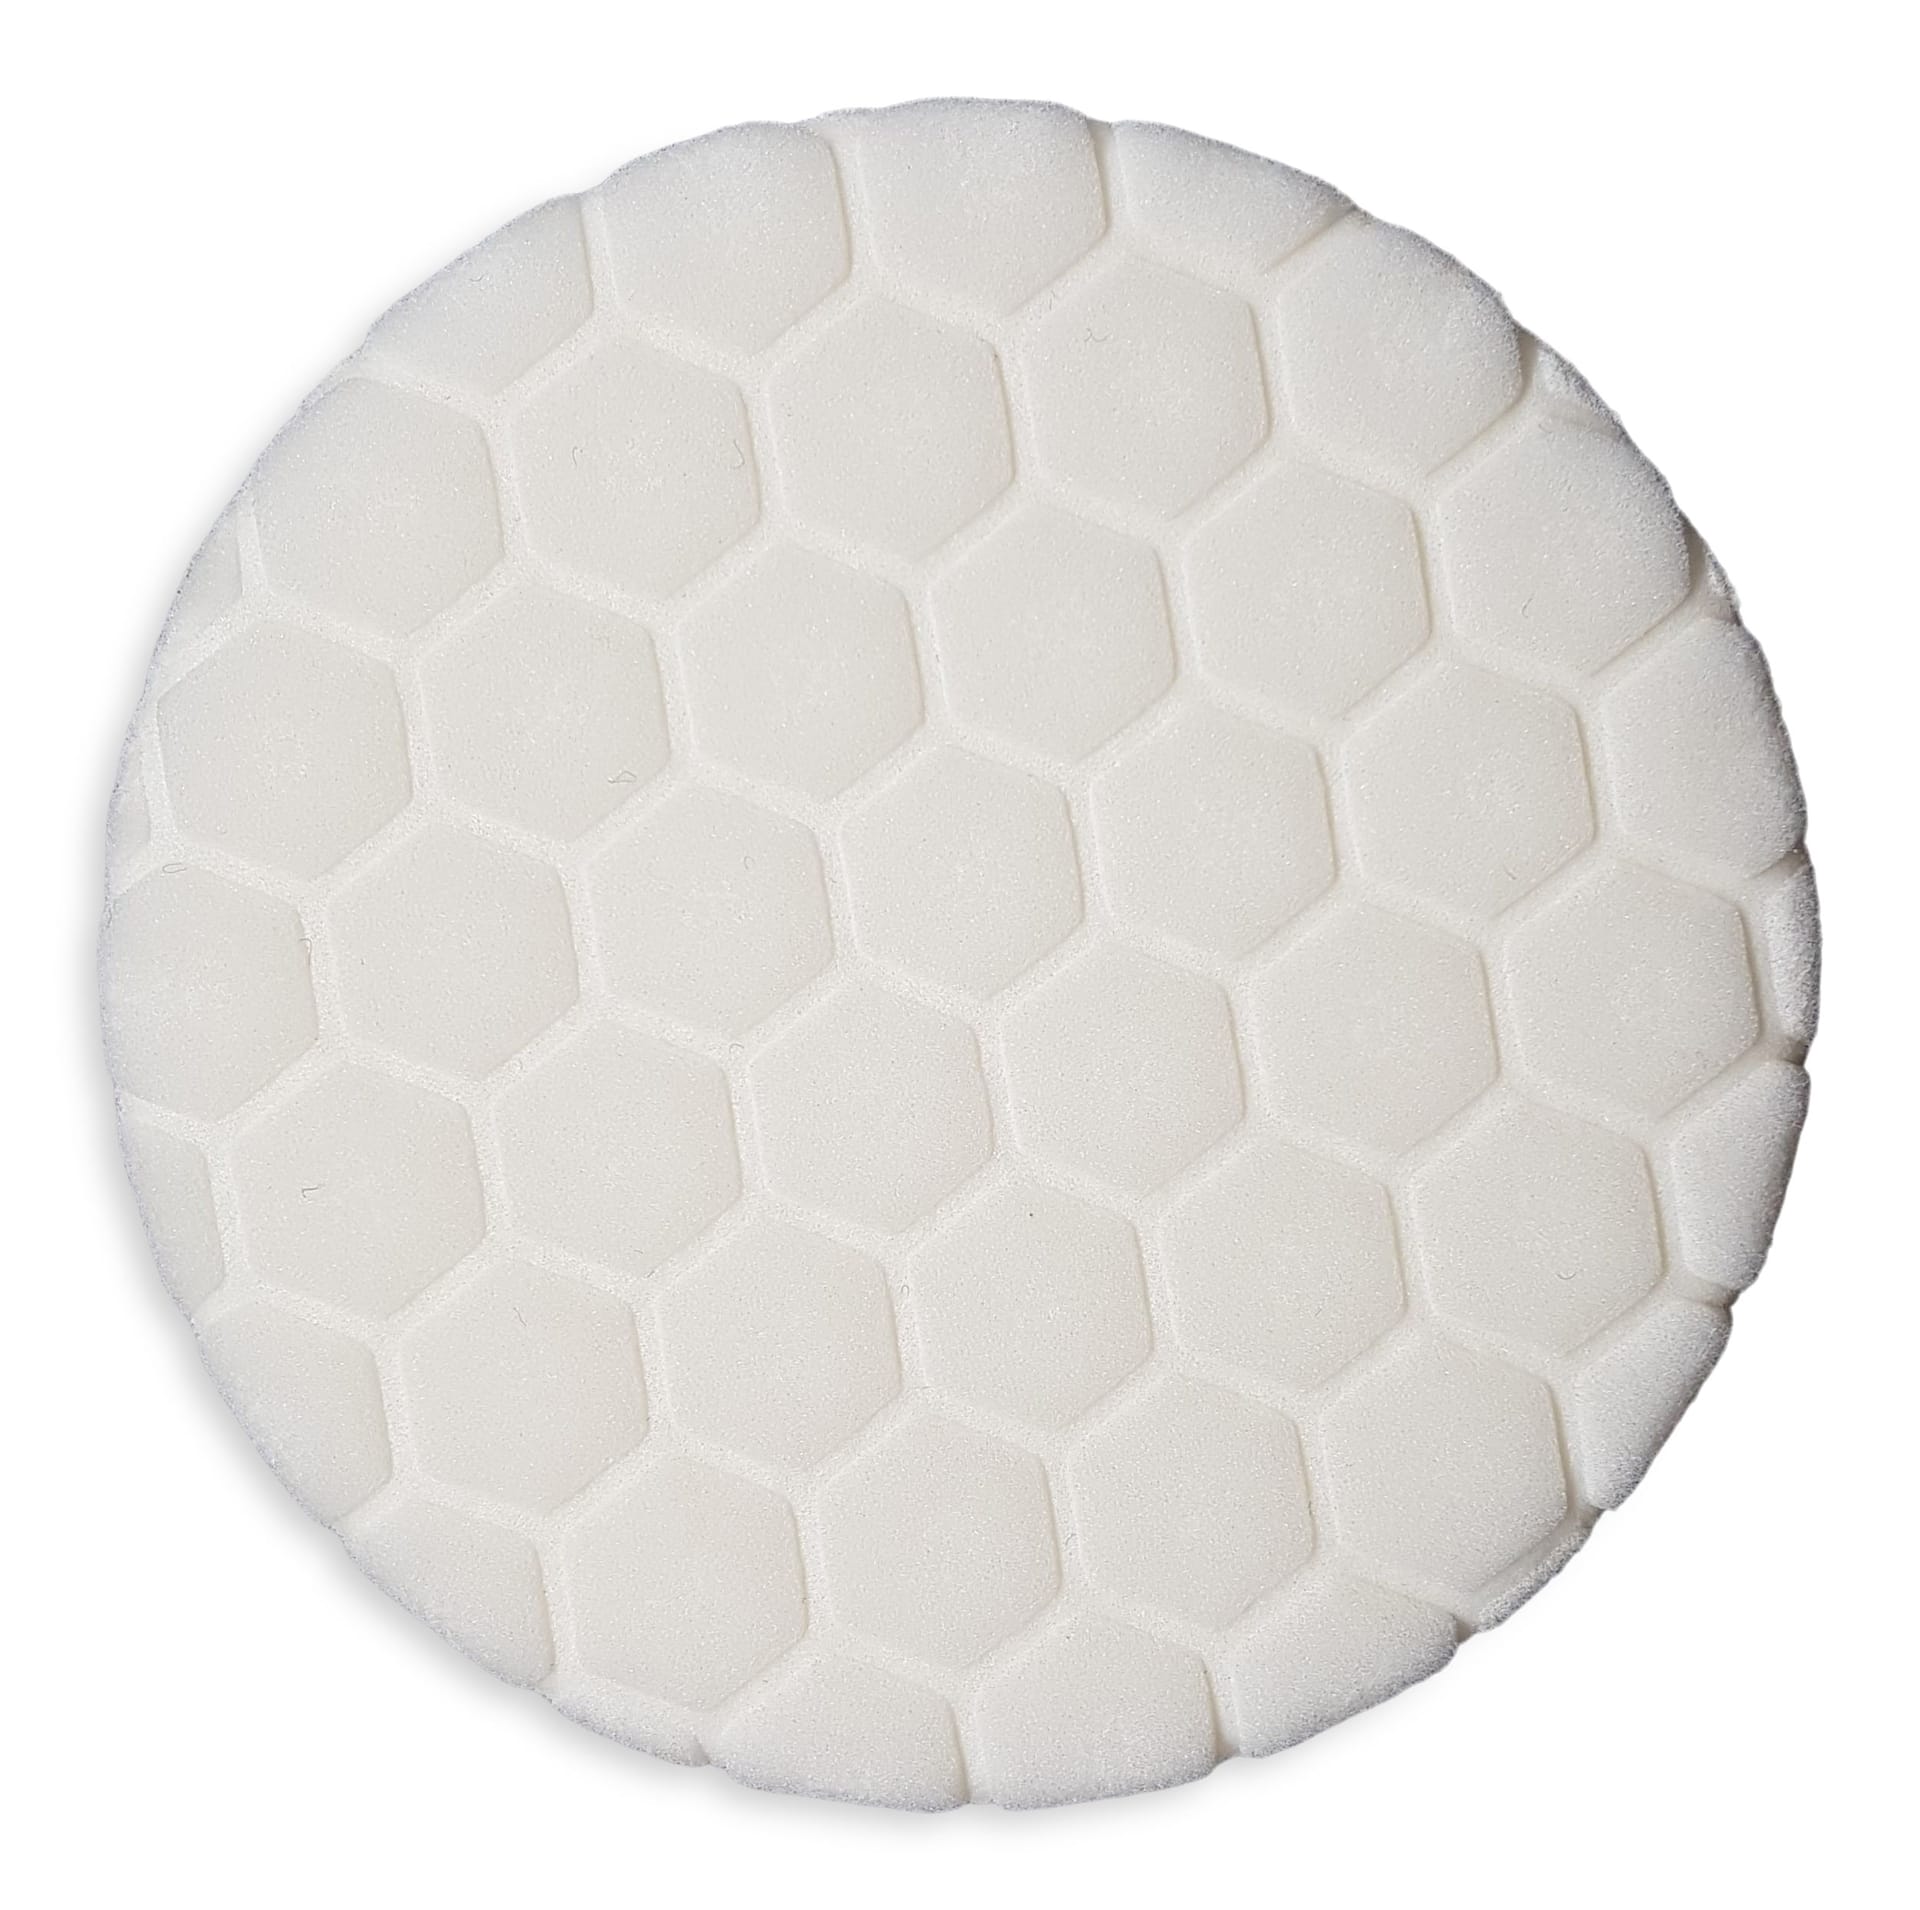 SIMONIZ Platinum Step-2 Hex Polishing Pad, 7-in, White | Canadian